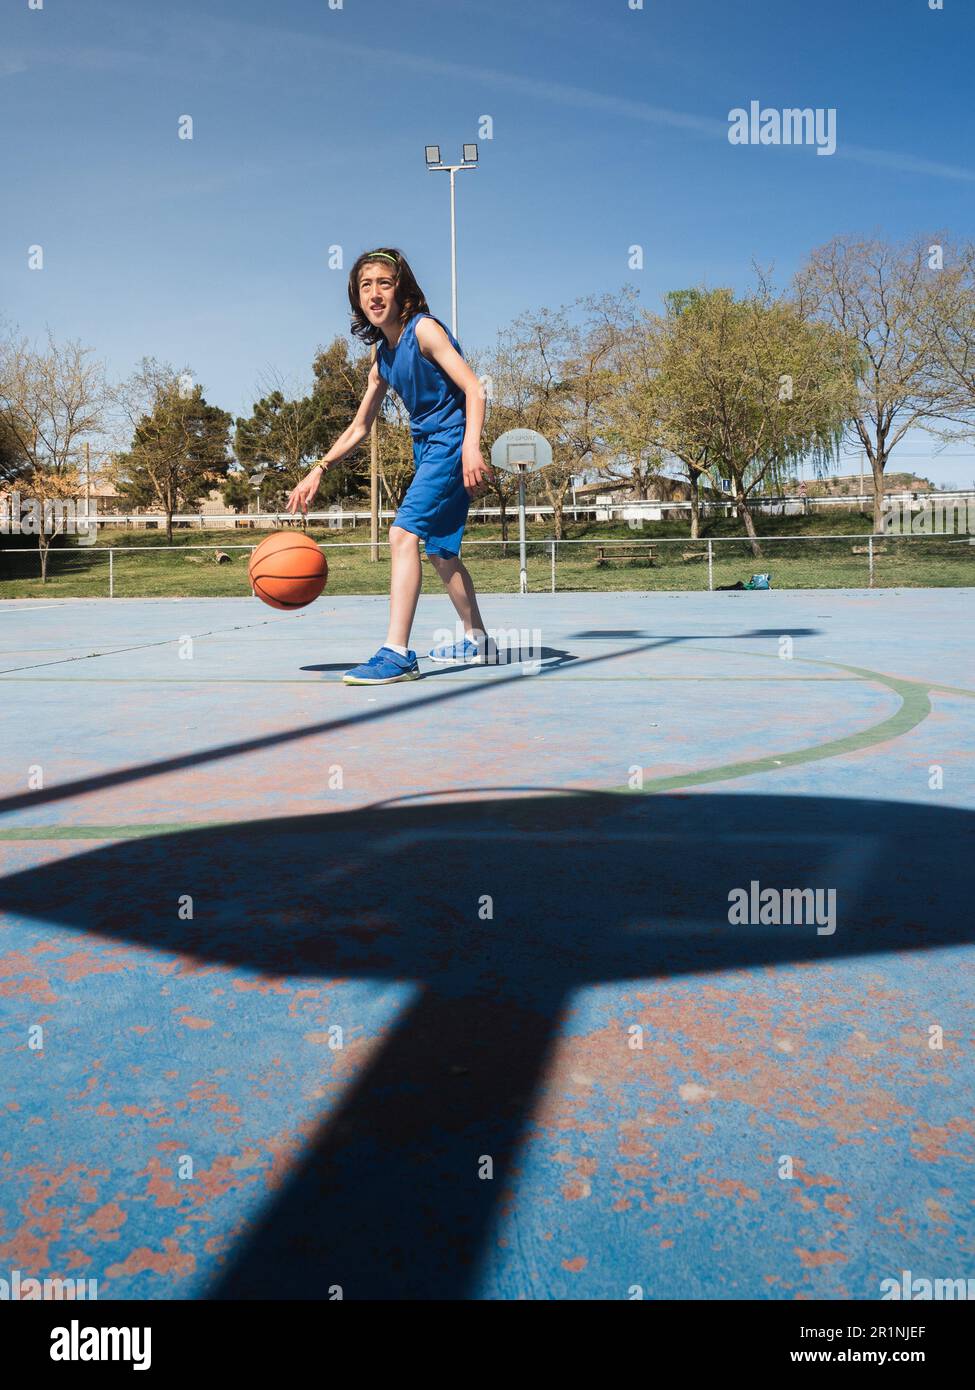 Junger Basketballspieler im Schatten des Korbs. Er hüpft den Ball über den Freiluftplatz. Stockfoto